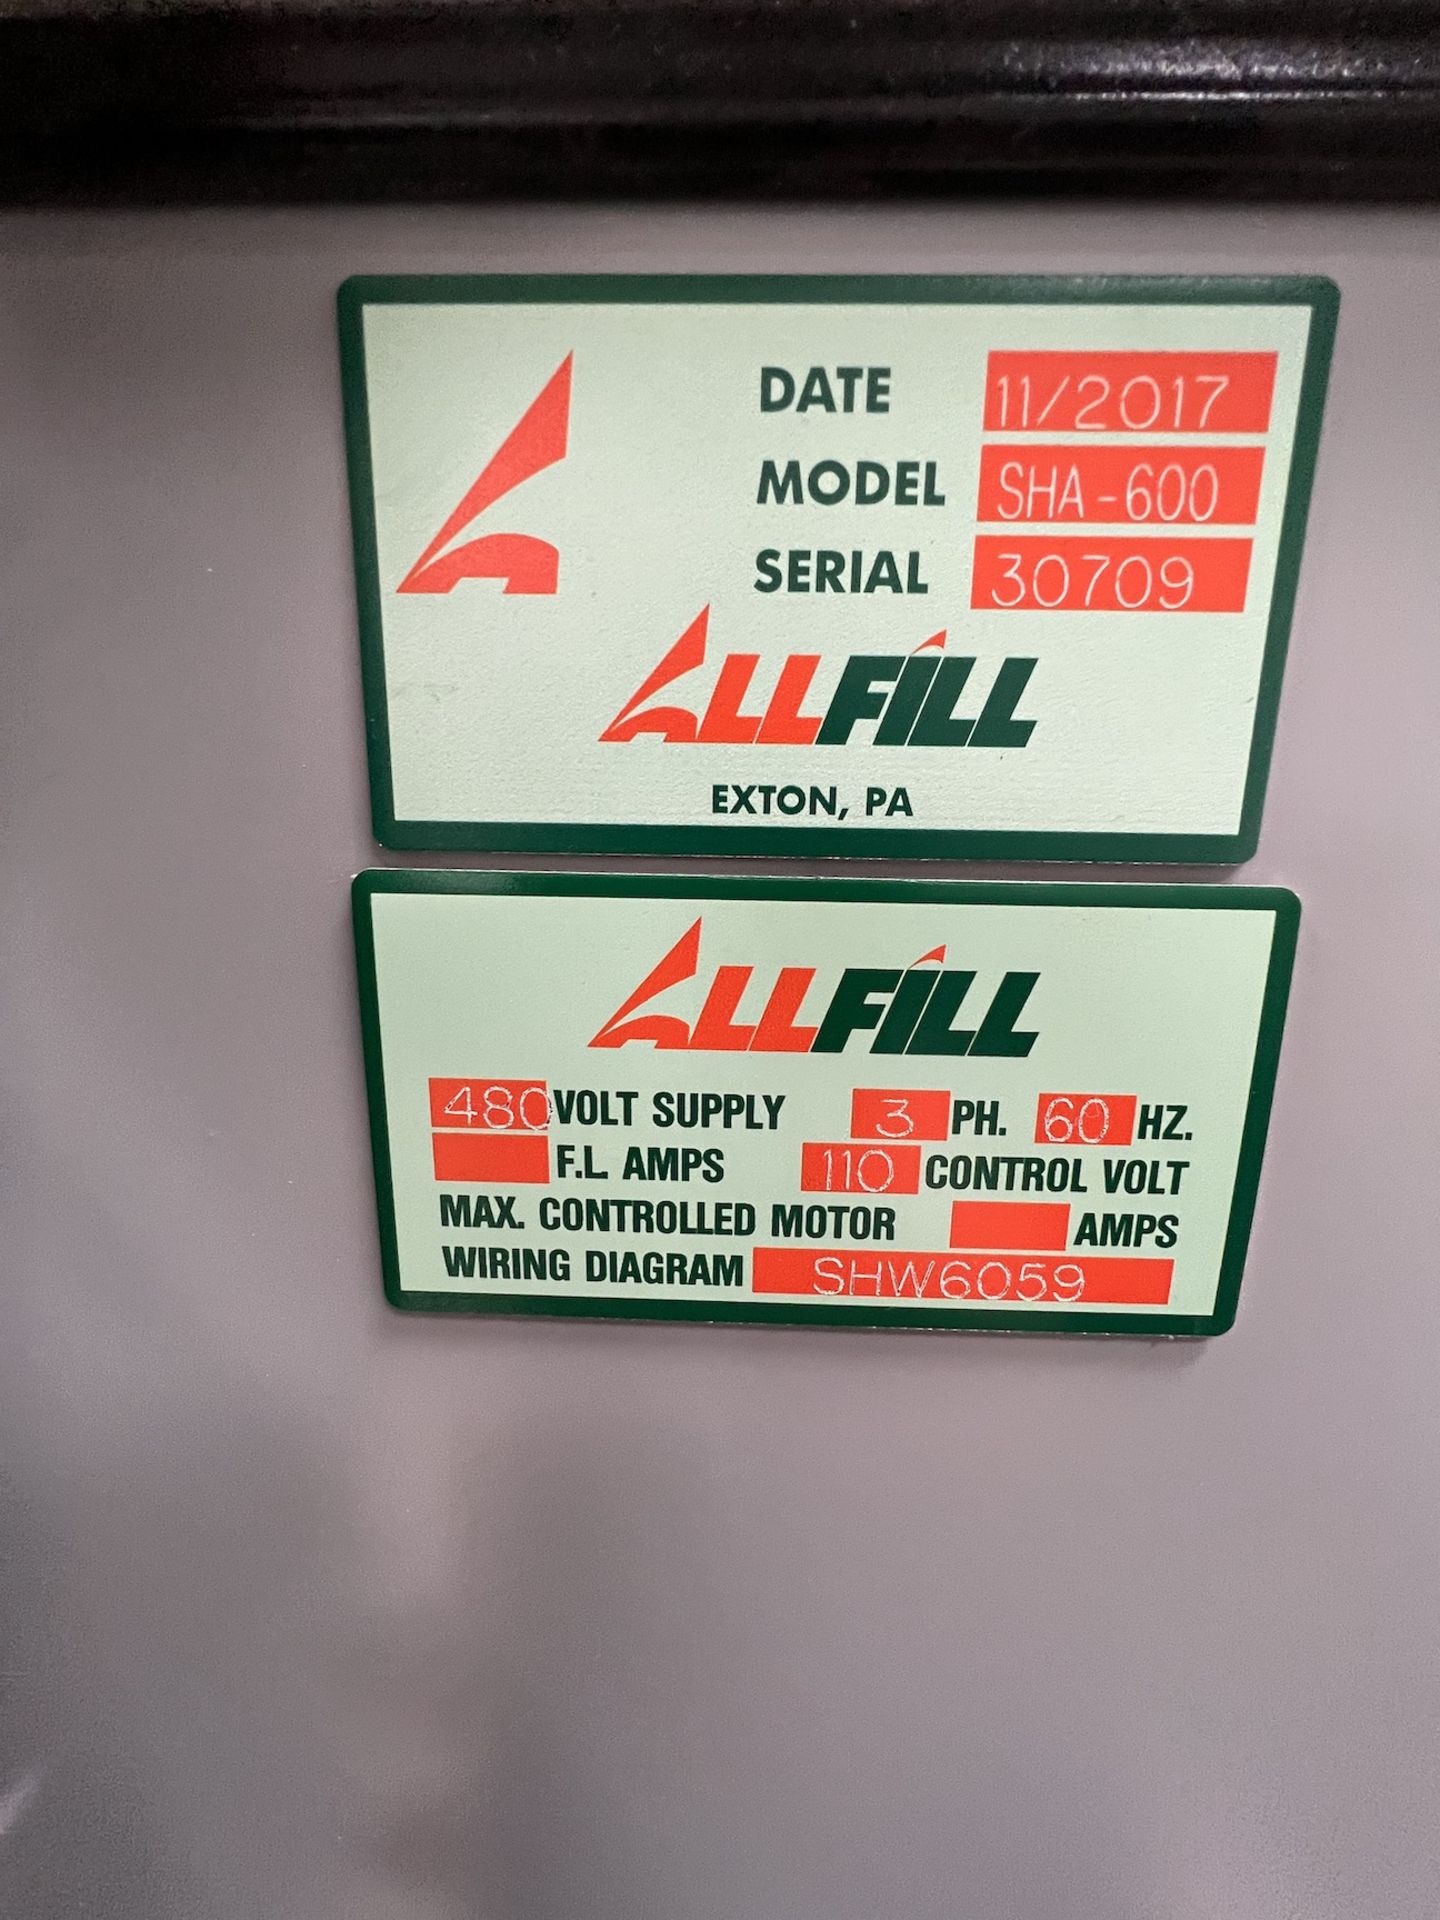 2017 ALLFILL AUGER FILLER, MODEL SHA600, S/N 30709, ALLEN-BRADLEY 1400 PLC480 V, 3 PHASE, 60 HZ - Image 15 of 20